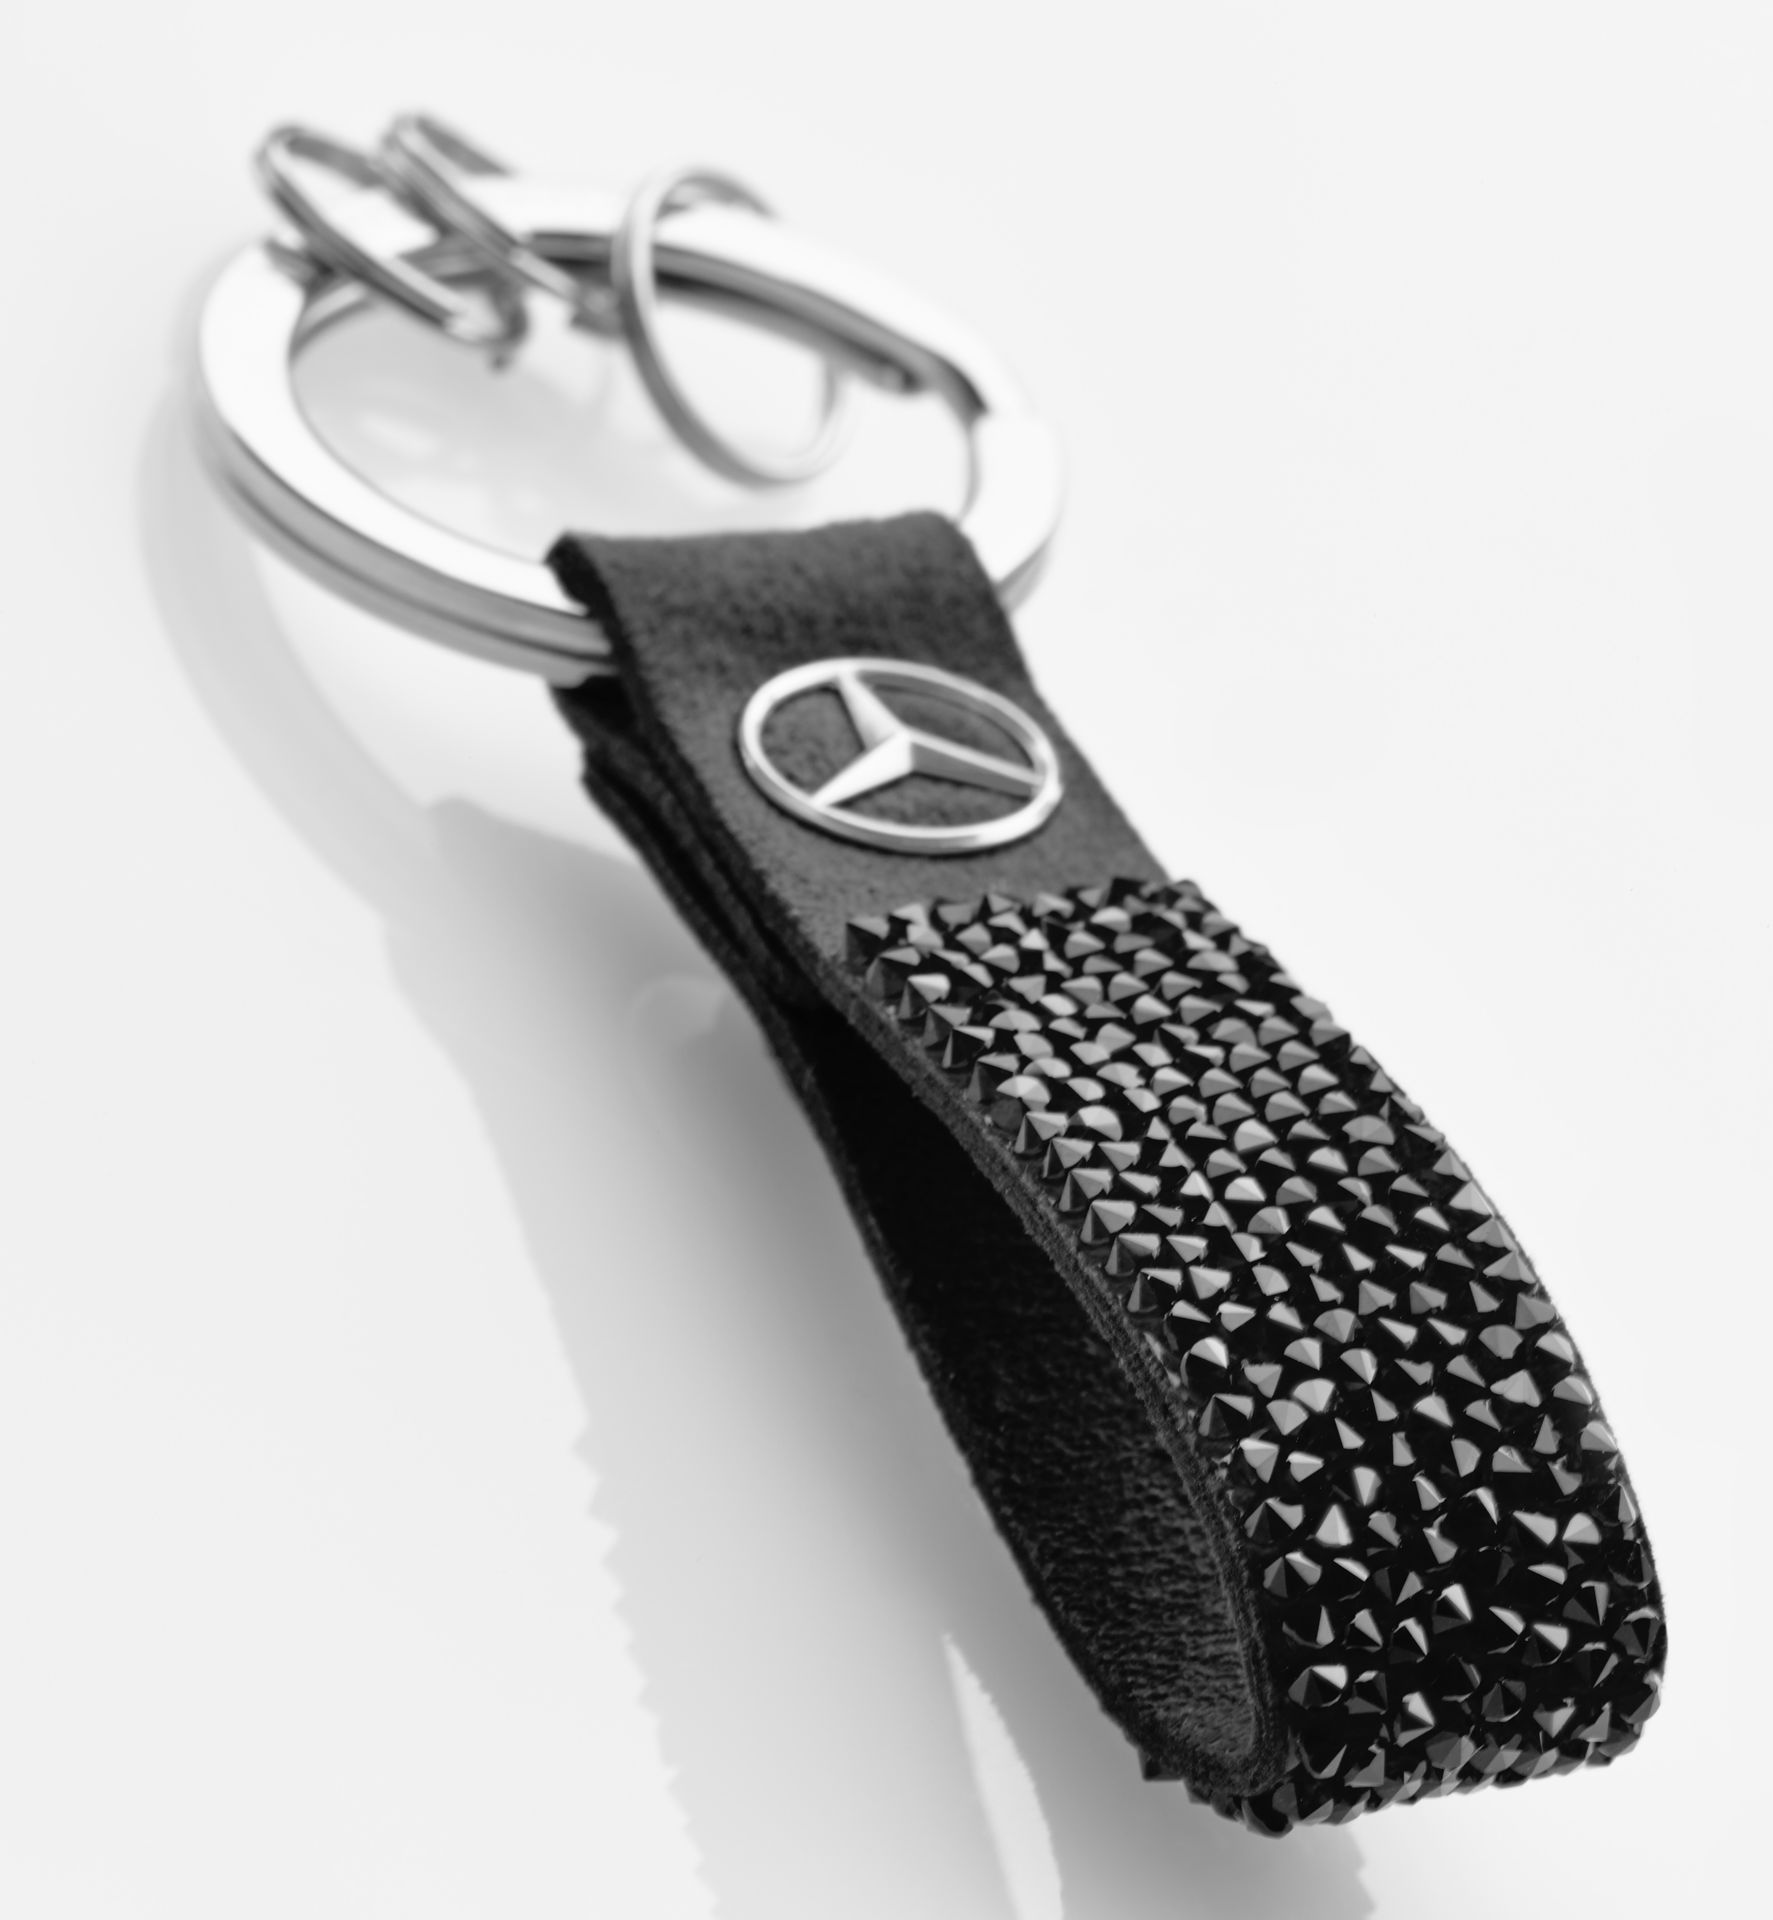 Брелок Mercedes-Benz Key Ring, Milano, Black, Swarovski